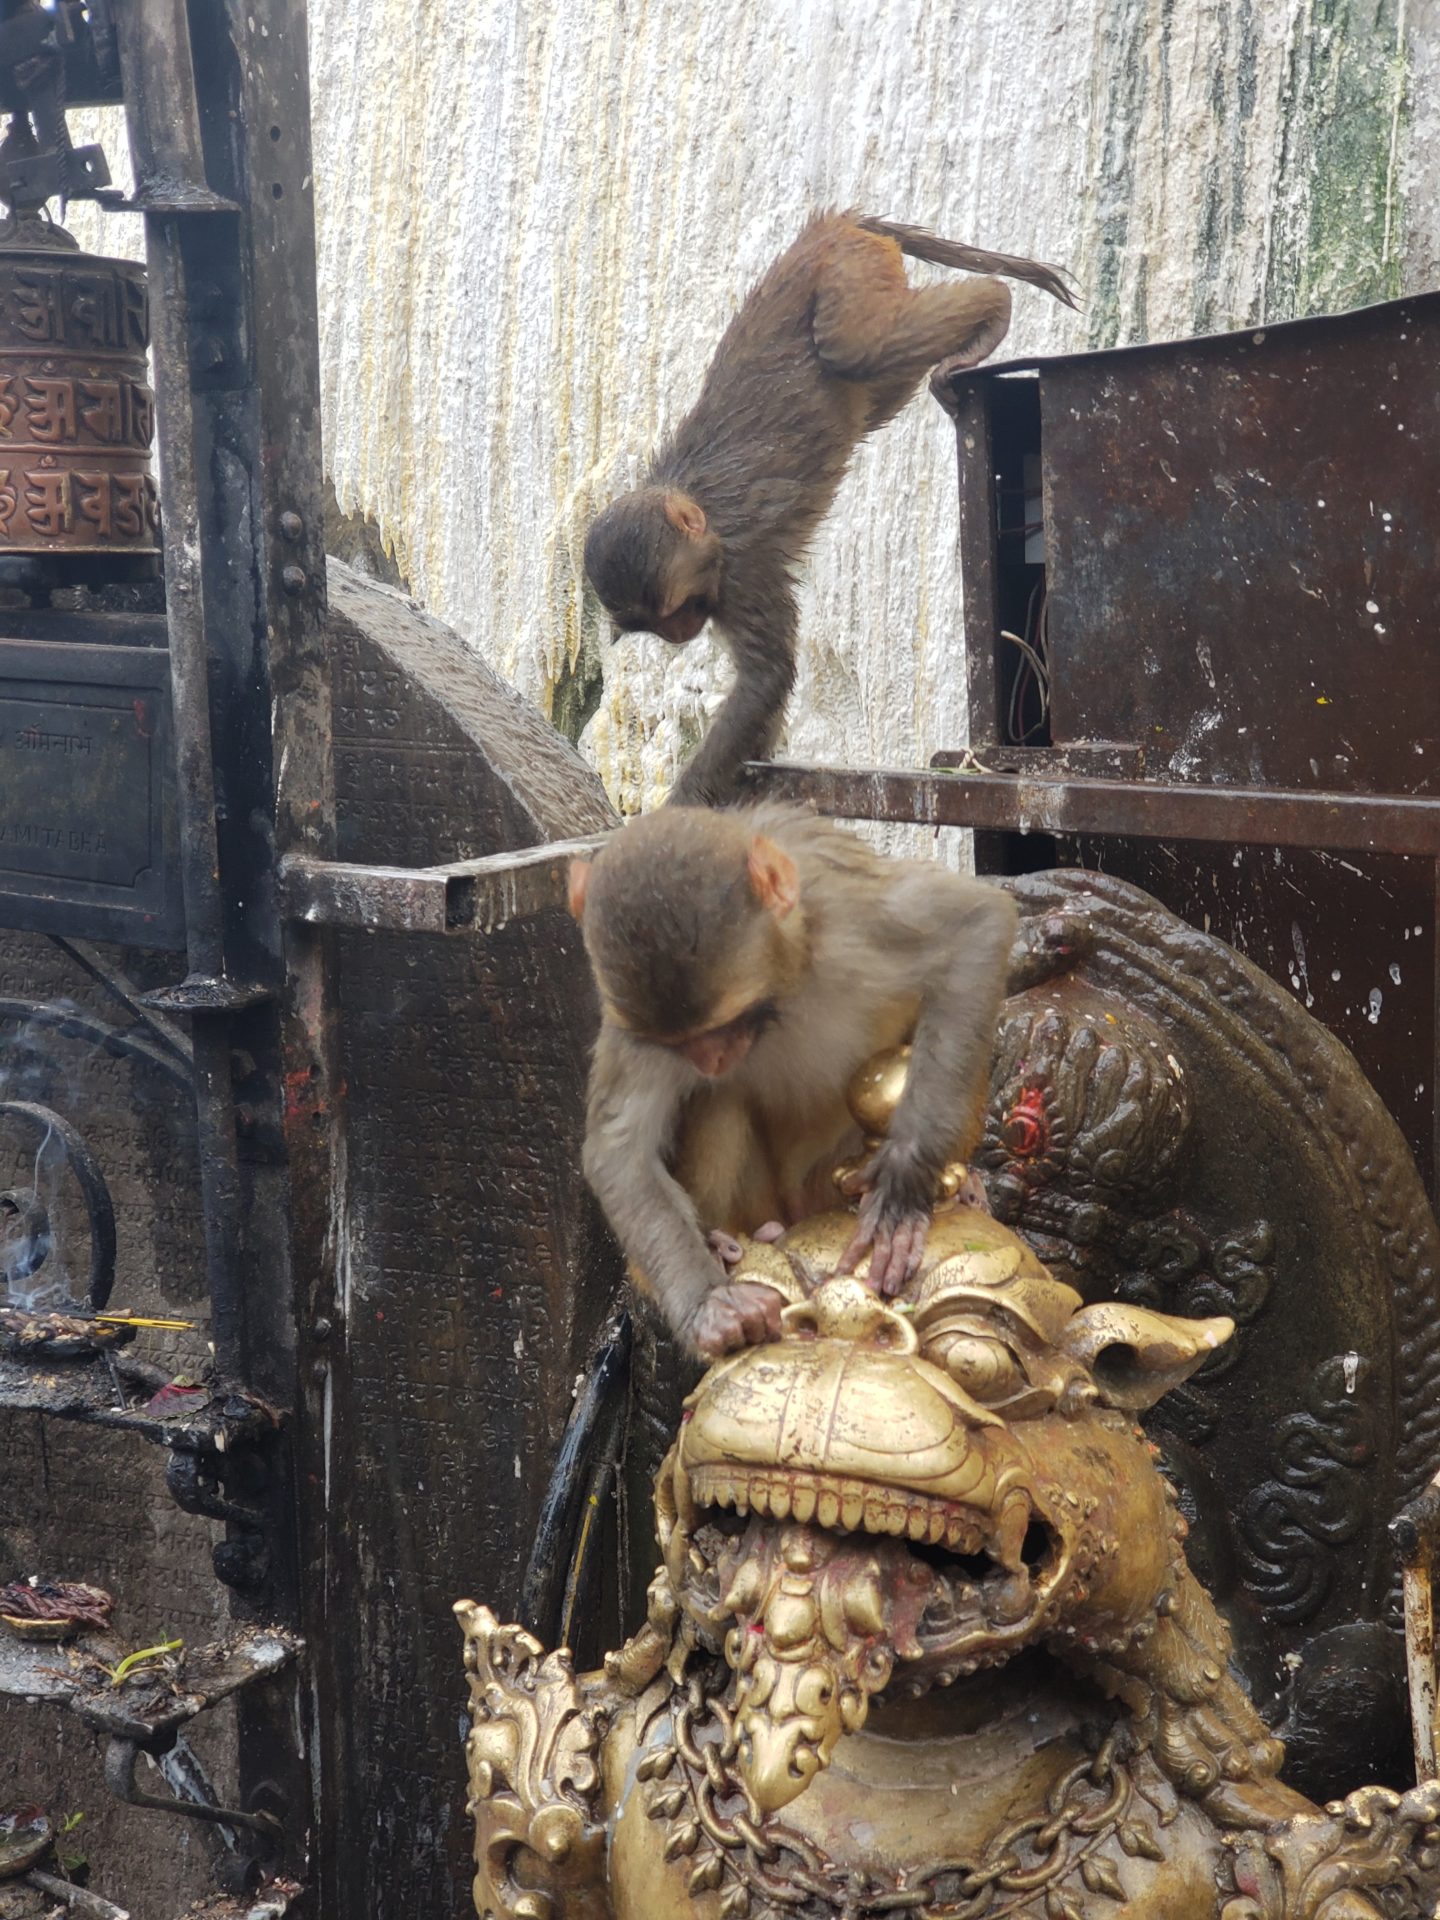 monkeys climbing on a statue